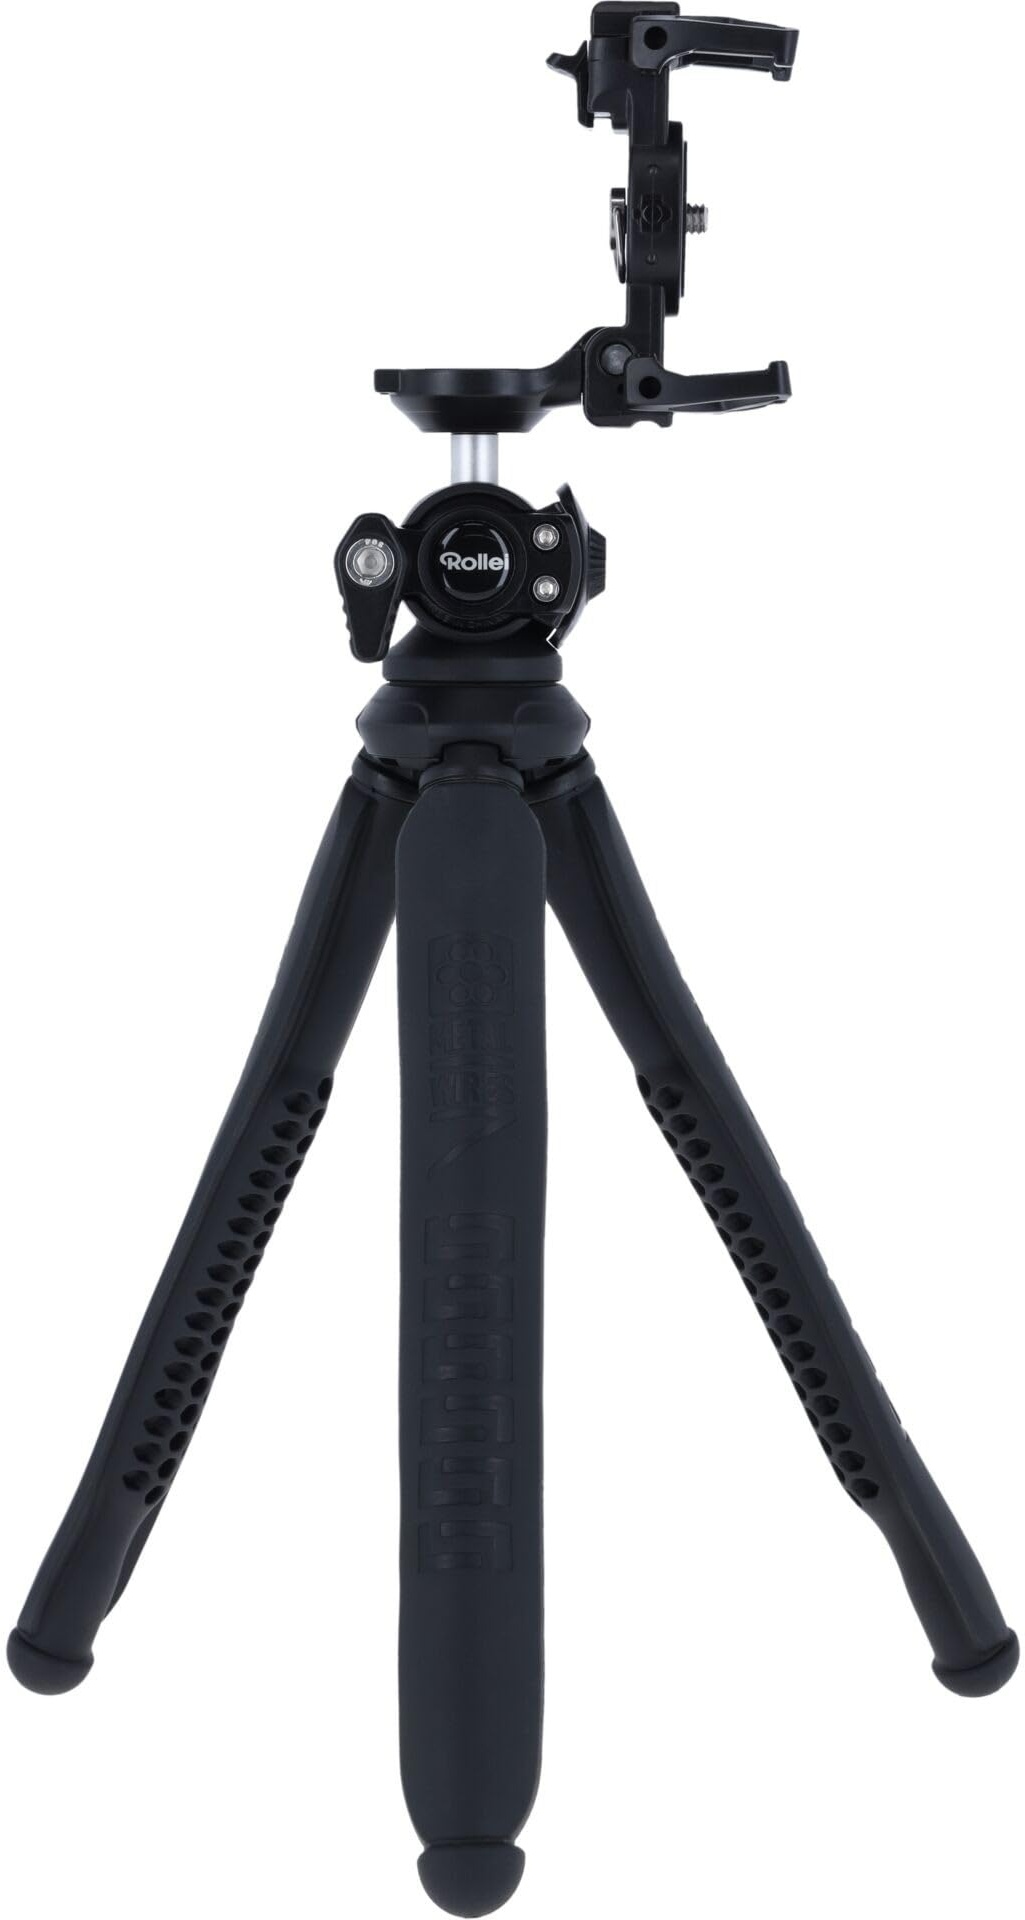 Rollei Monkey Pod 3: Vielseitiges Mini-Stativ - Smartphone, Kamera, Selfie-Stick - Kompatibel, flexibel, leicht, 360° drehbarer Kugelkopf (schwarz)